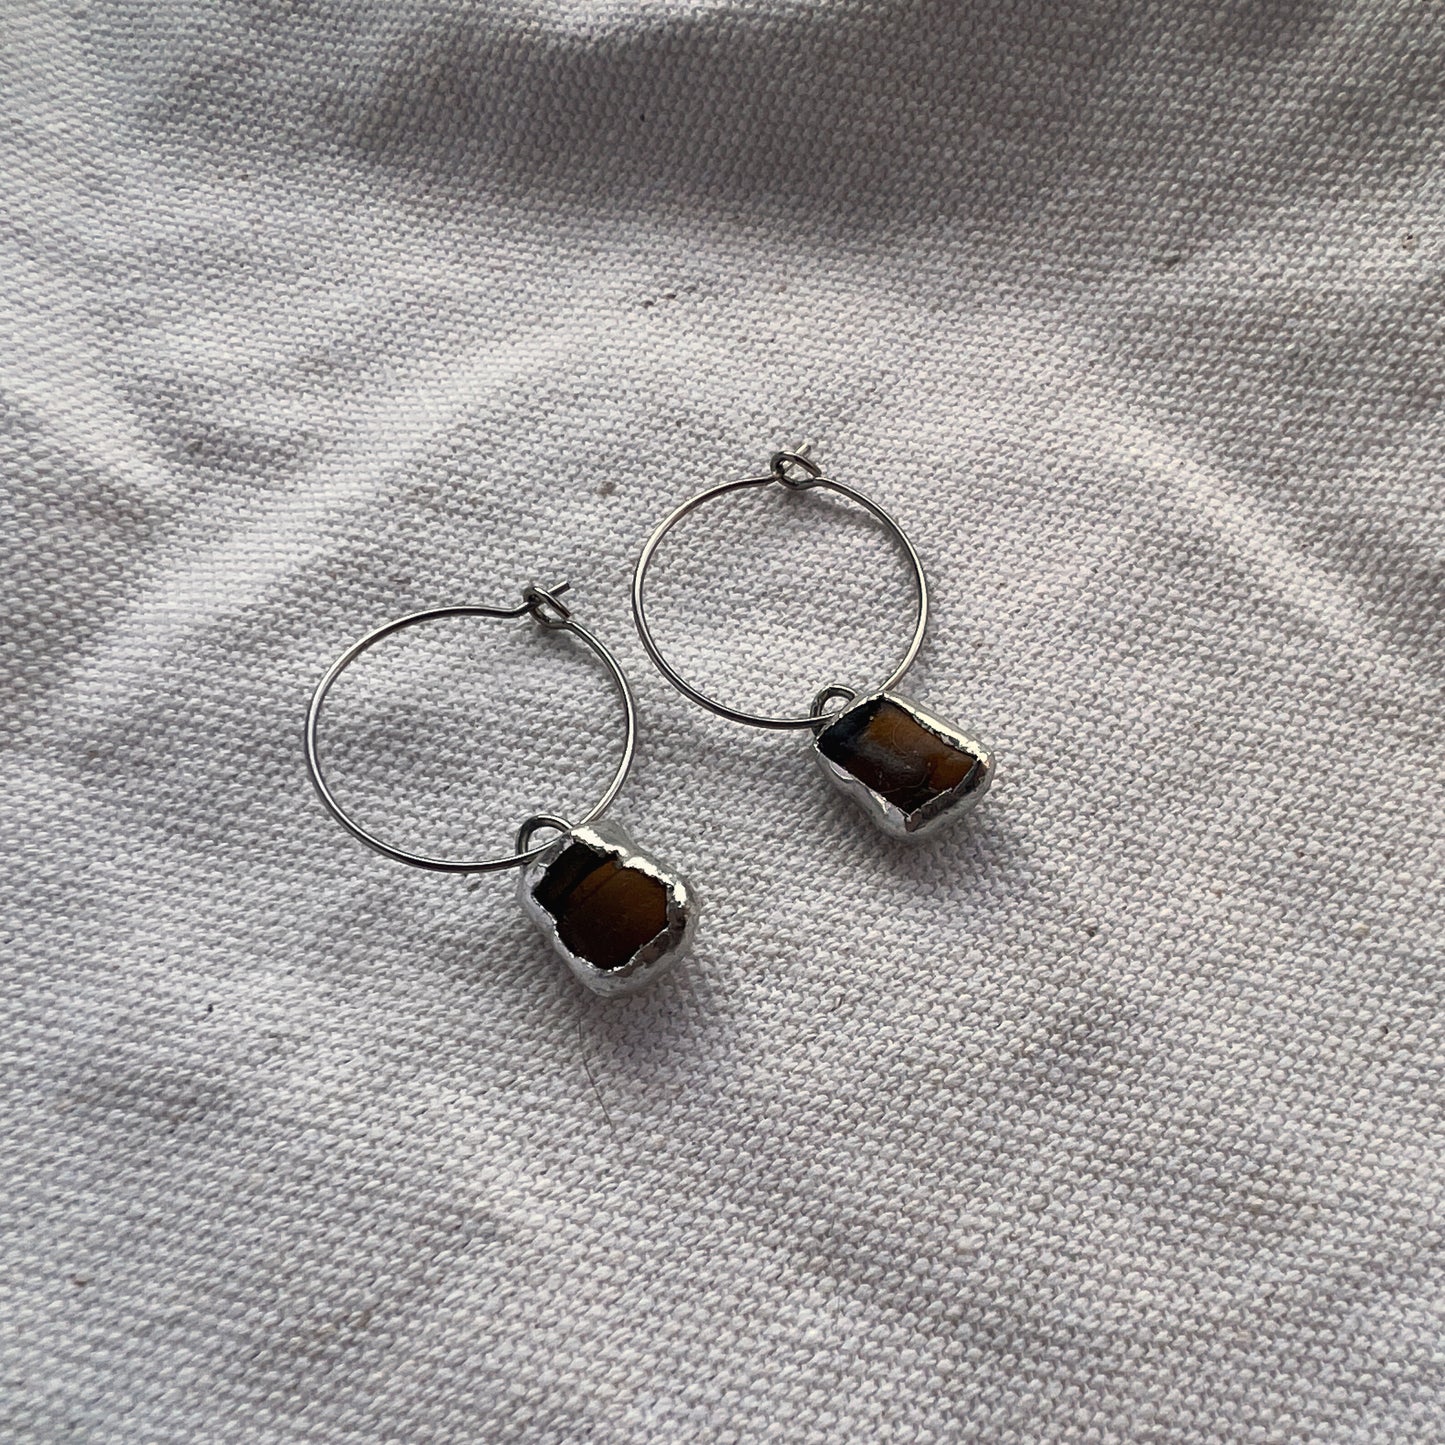 Chicago Beach Glass Earrings (Soldered Brown Hoops)